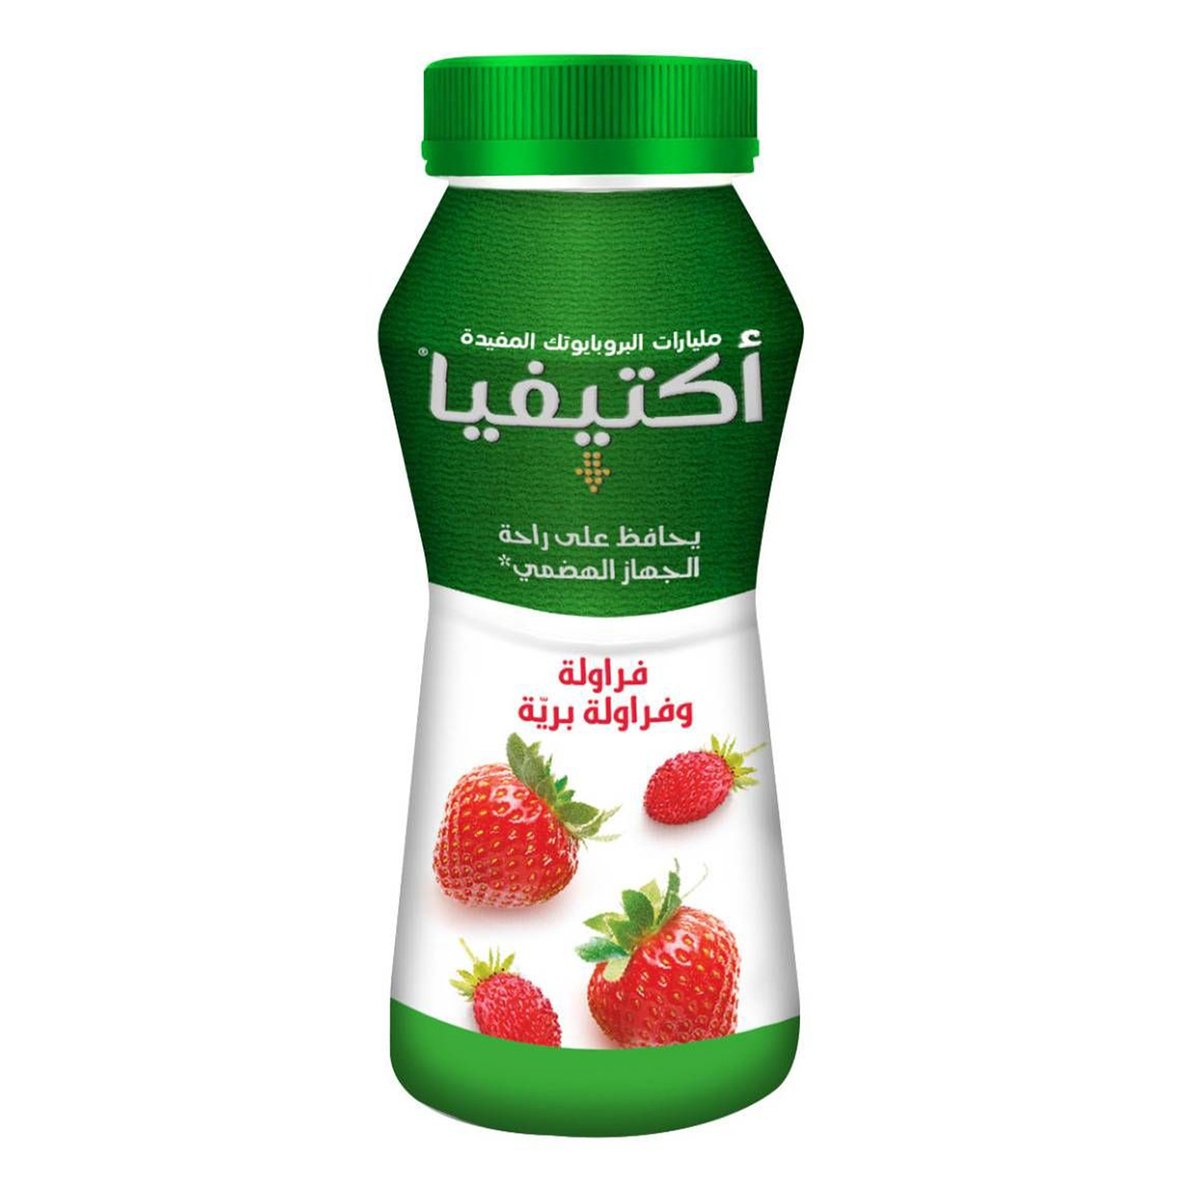 Activia Yoghurt Go Strawberry & Wild Strawberry 180 ml